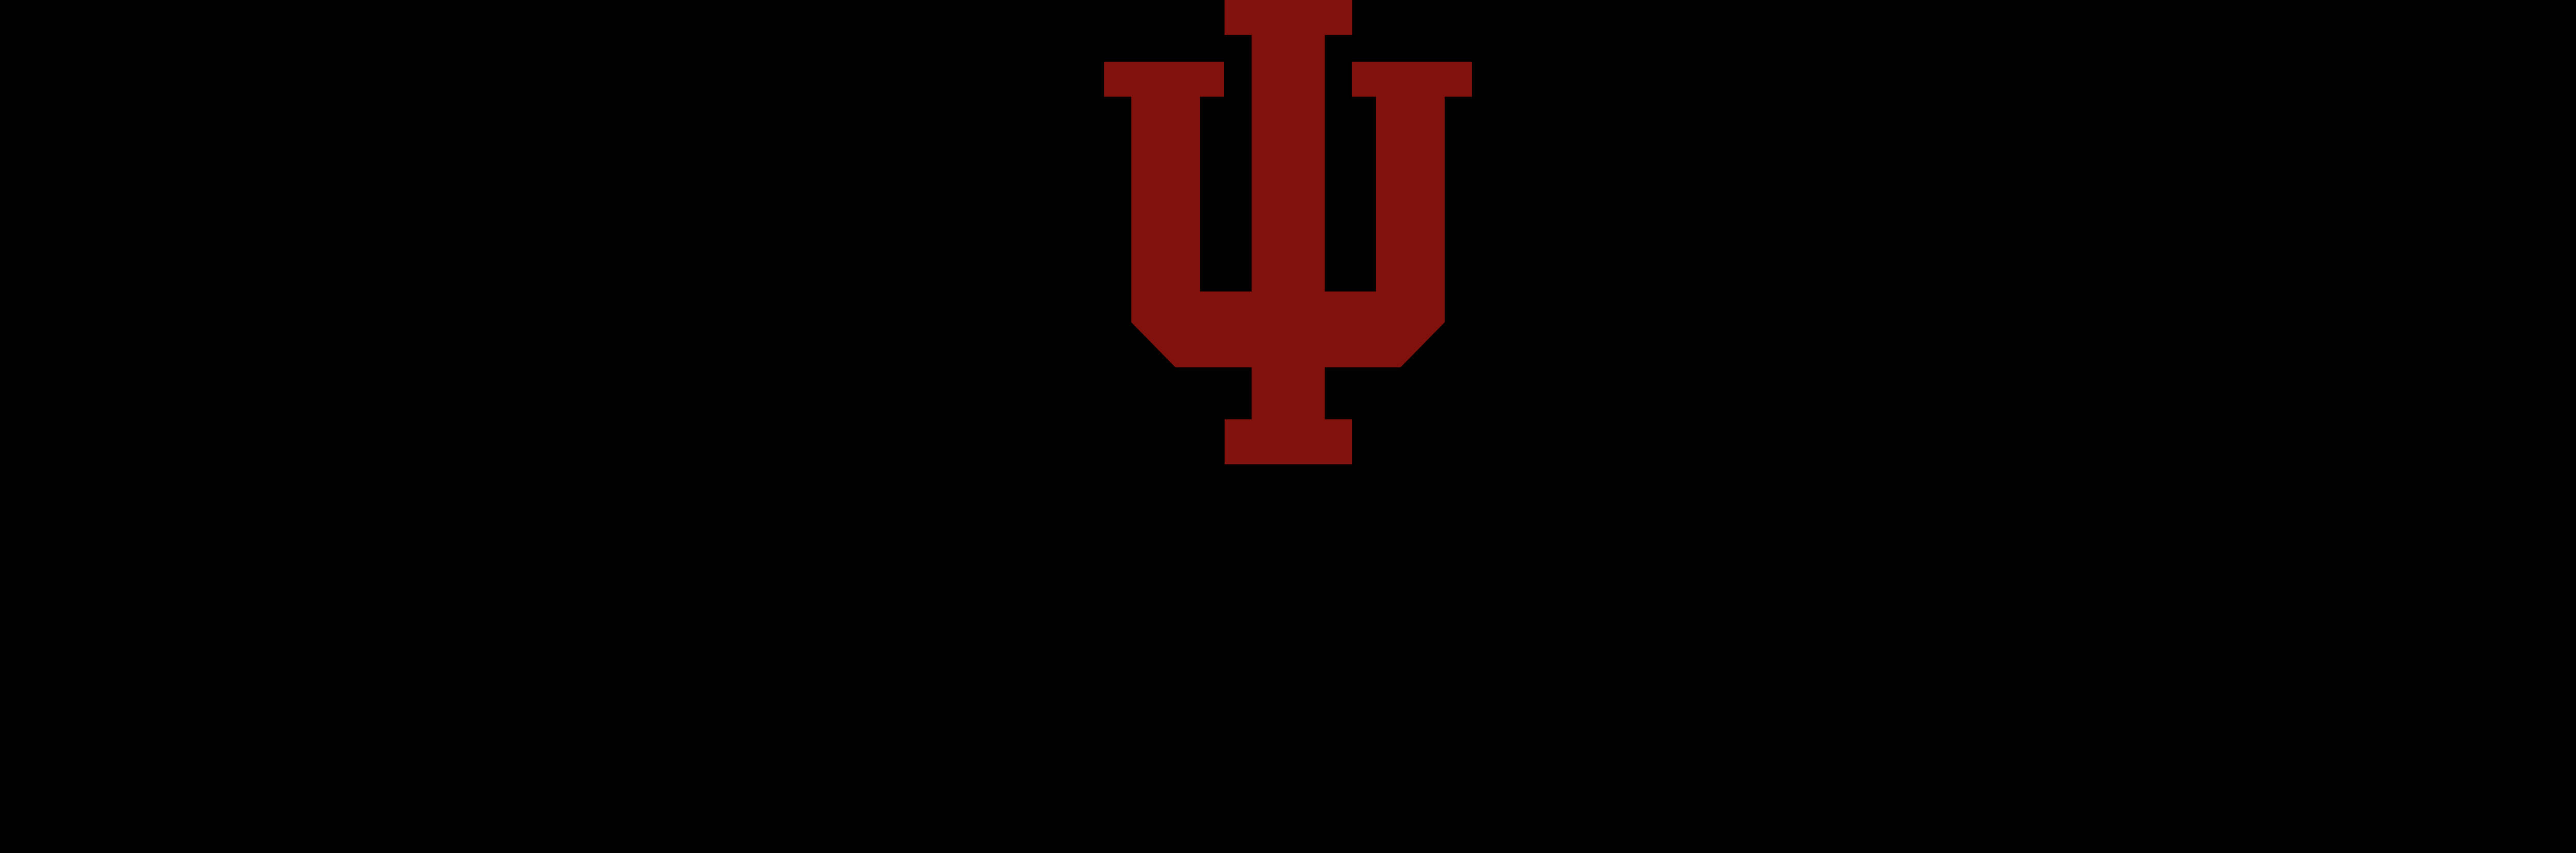 Indiana University Bloomington School Logo Wallpaper